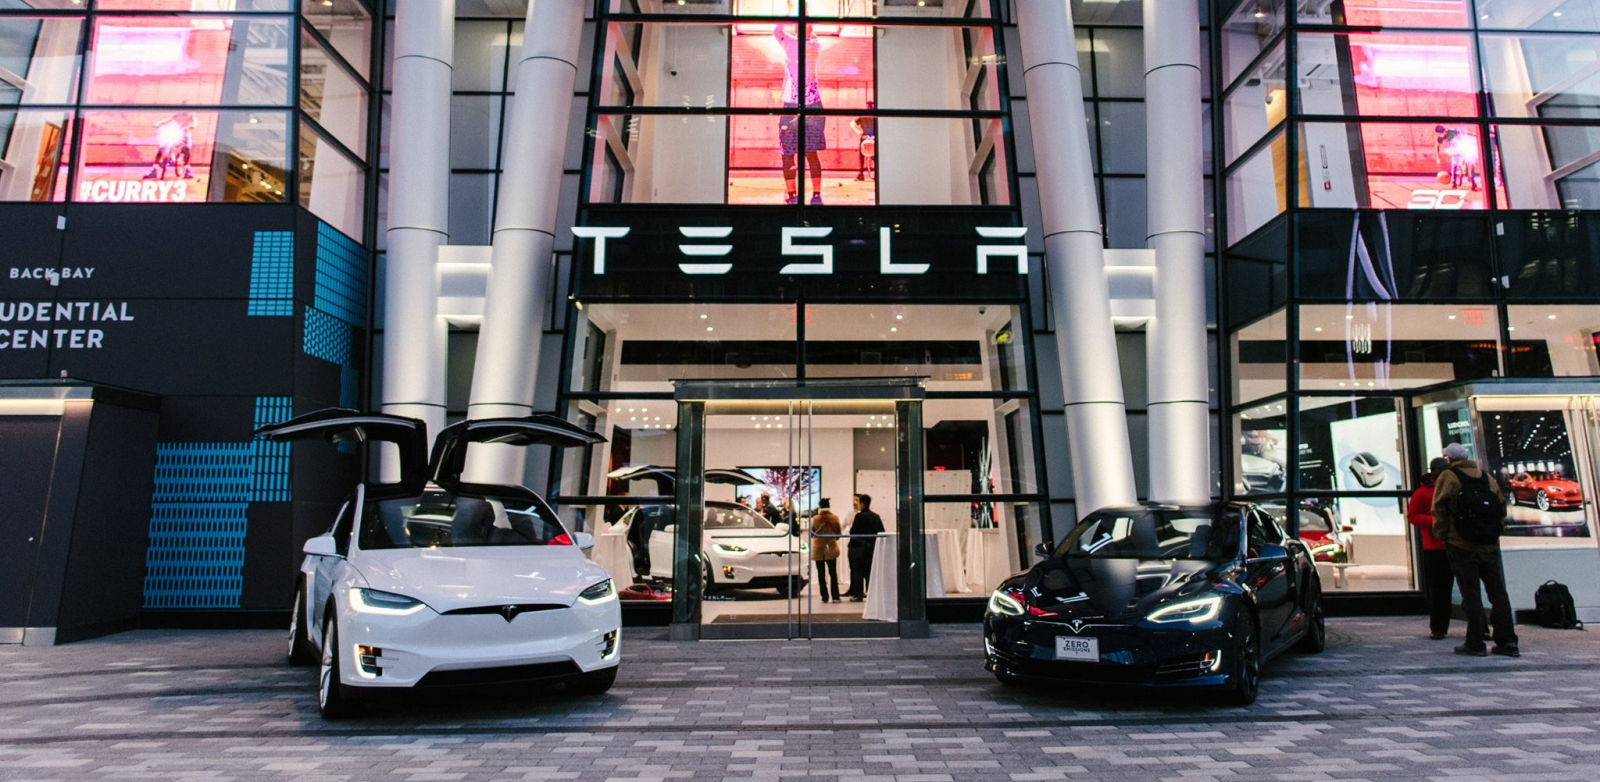 Tesla's store in Boston